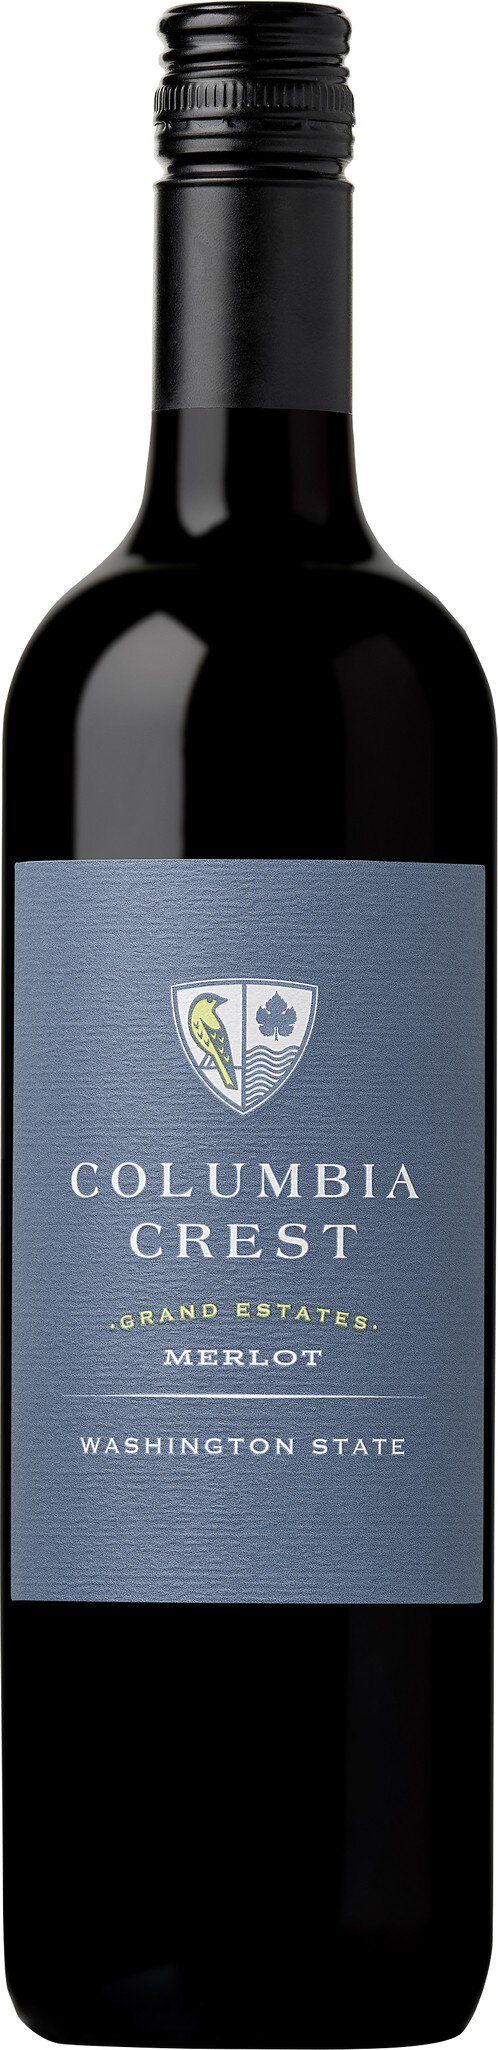 Columbia Crest Grand Estates Merlot 2020 0.75 l Valley Rotwein